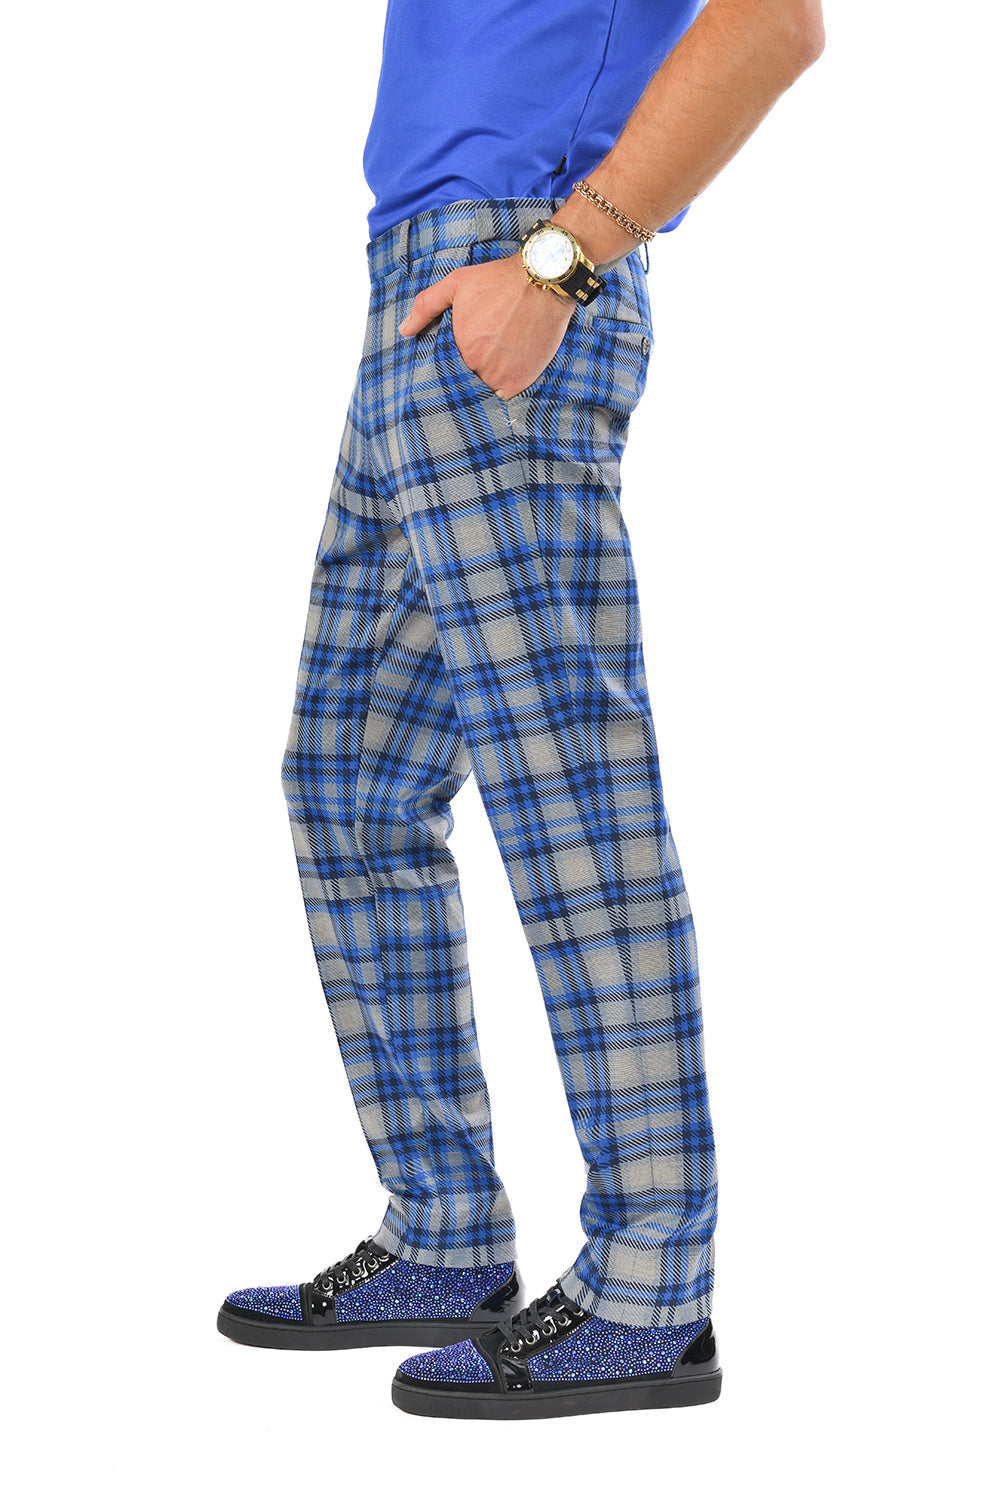 Barabas Men's Printed Checkered Design Wine Blue Chino Pants CP181  Blue Grey